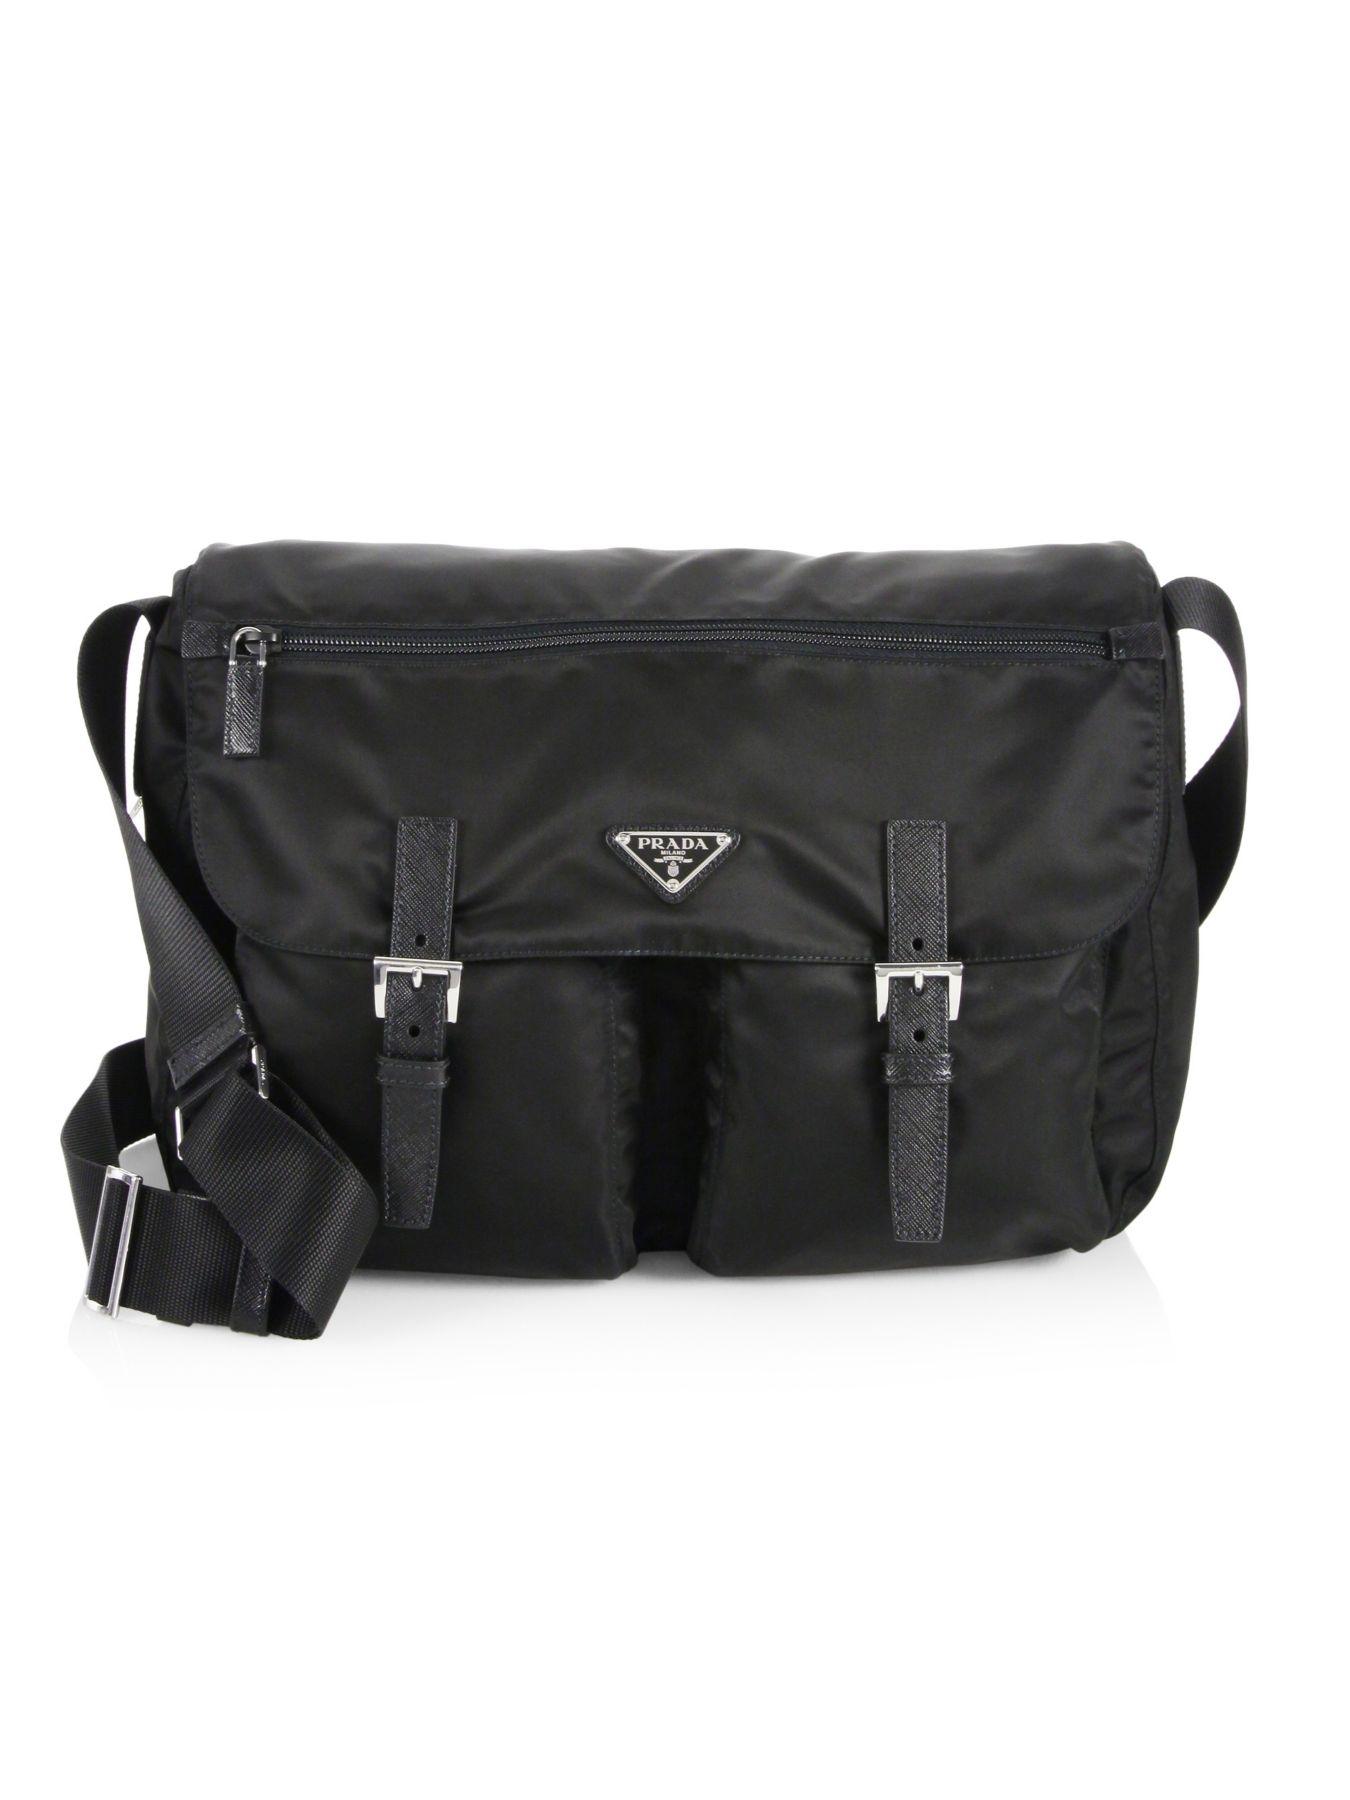 Prada Synthetic Nylon Messenger Bag in Black - Lyst